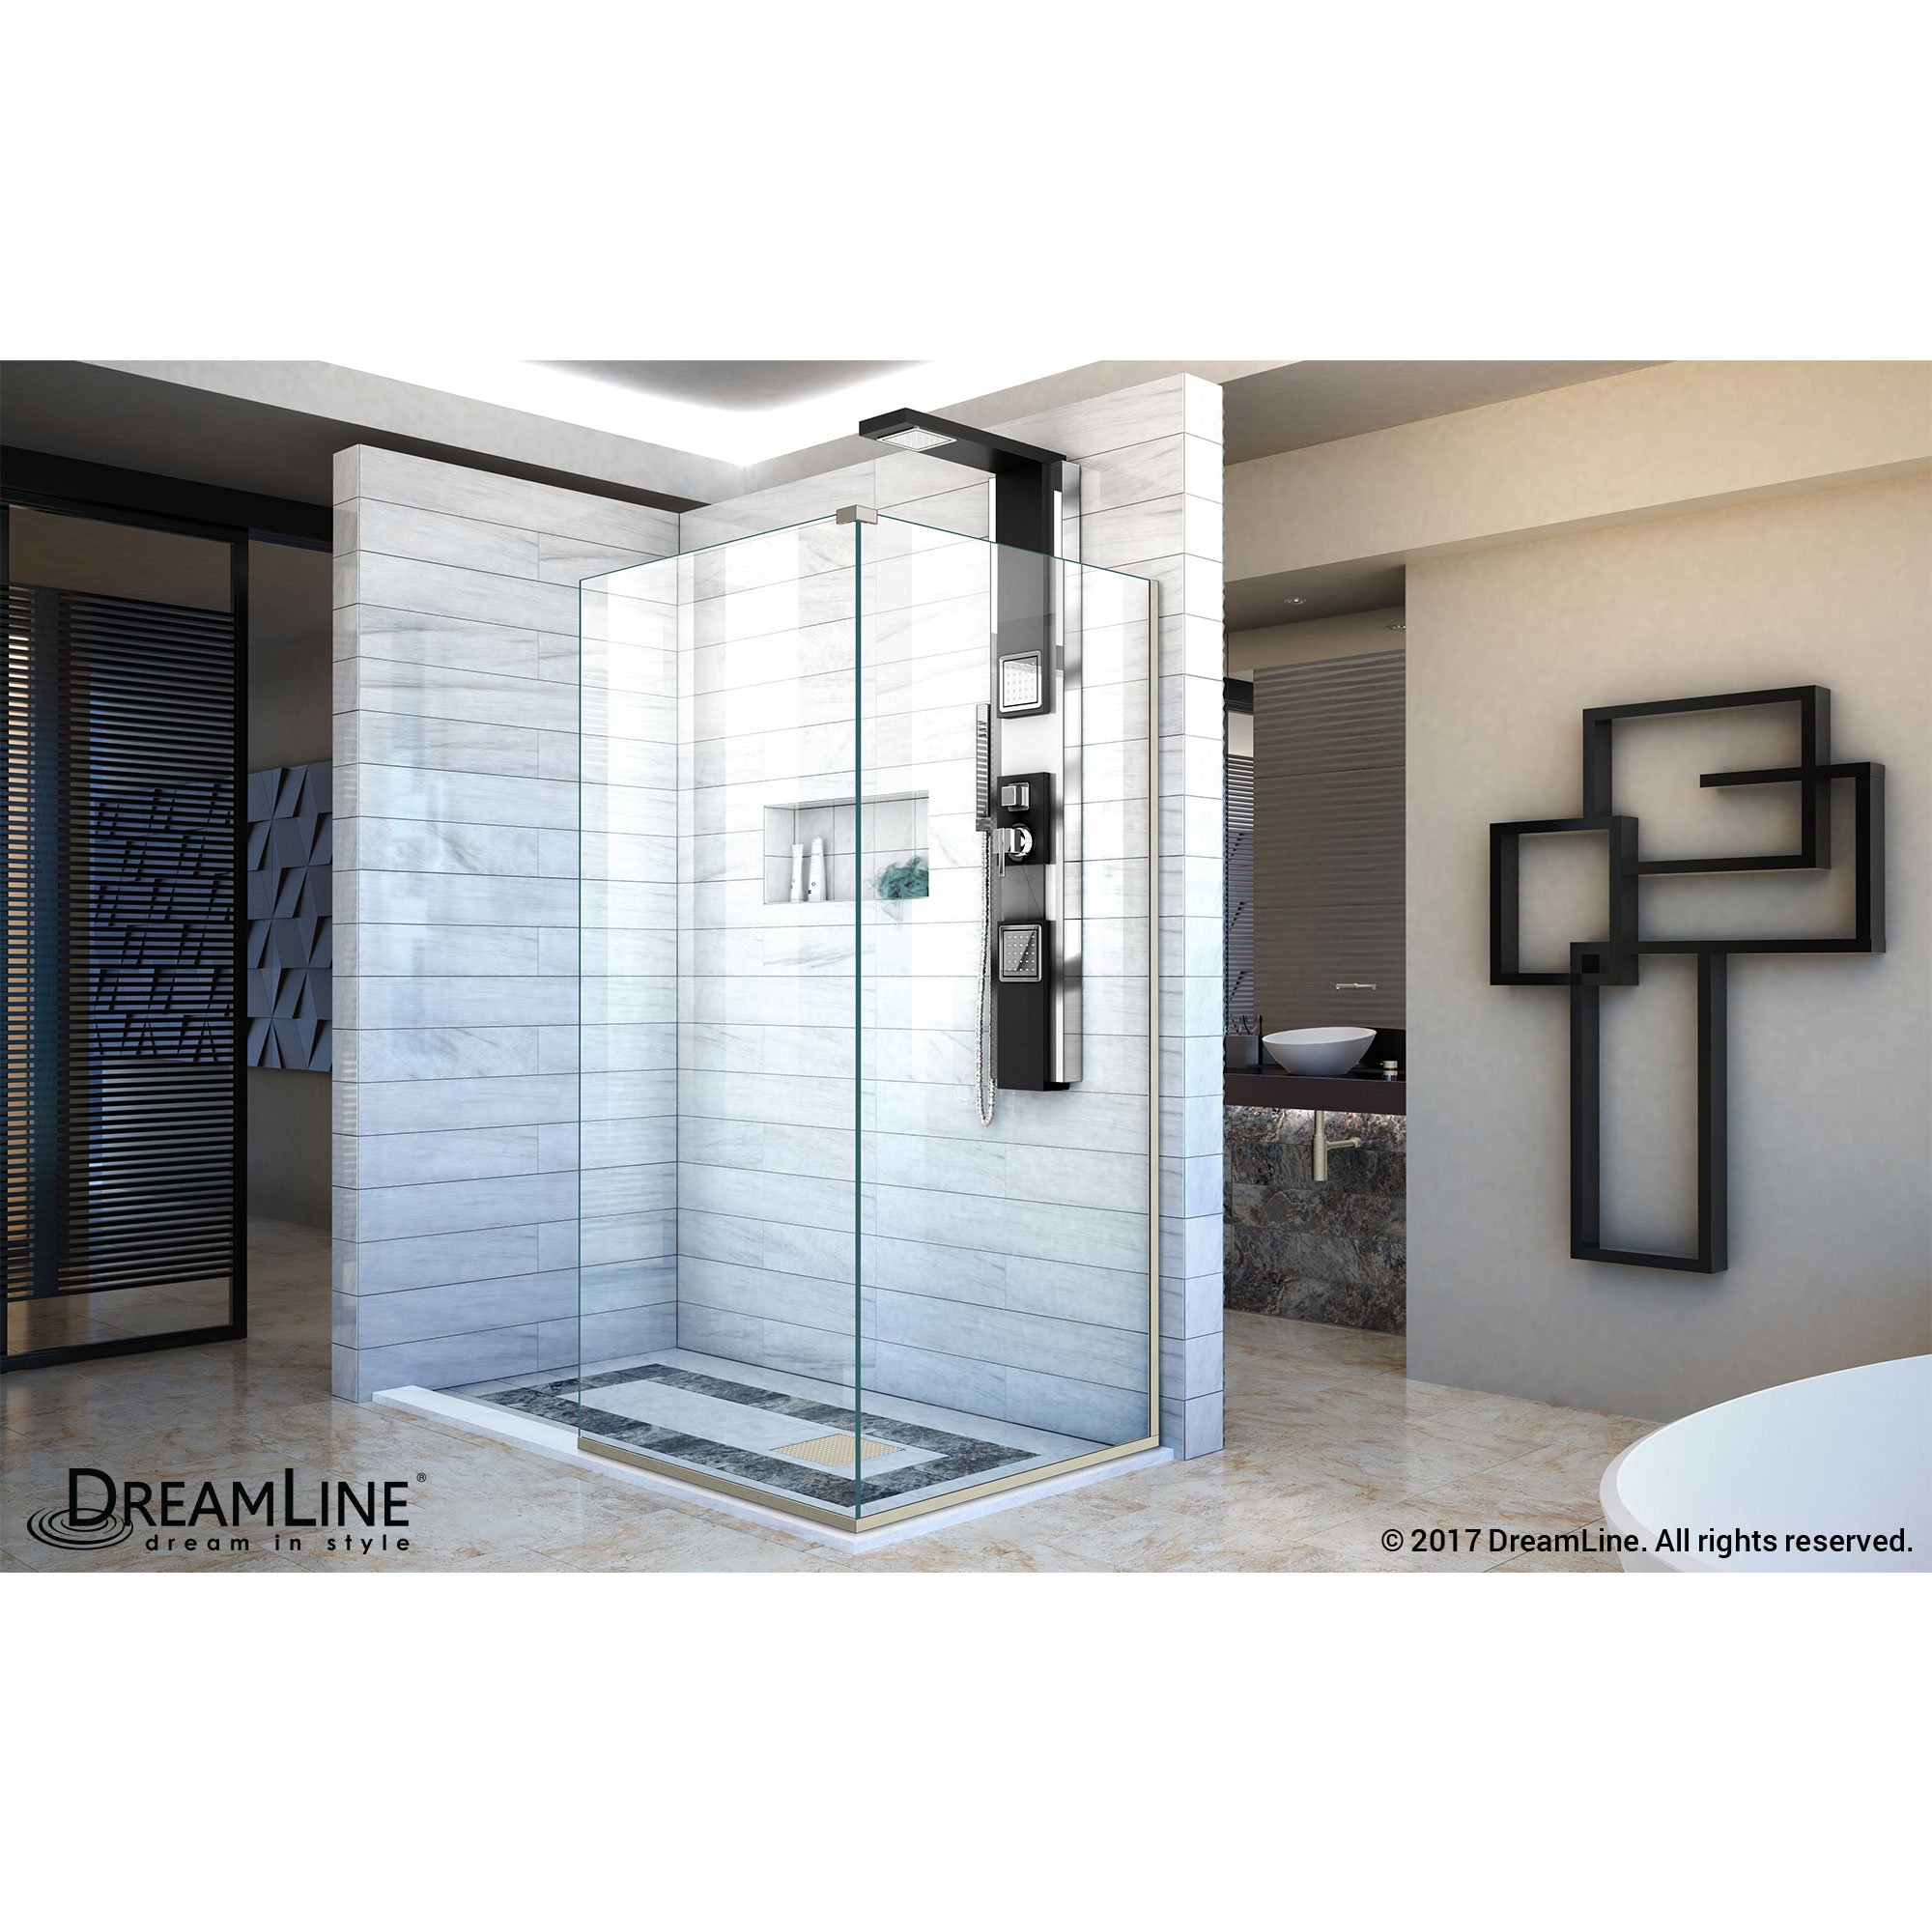 DreamLine Linea Two Adjacent Frameless Shower Screens 30 in. W x 72 in. H each, Open Entry Design in Brushed Nickel